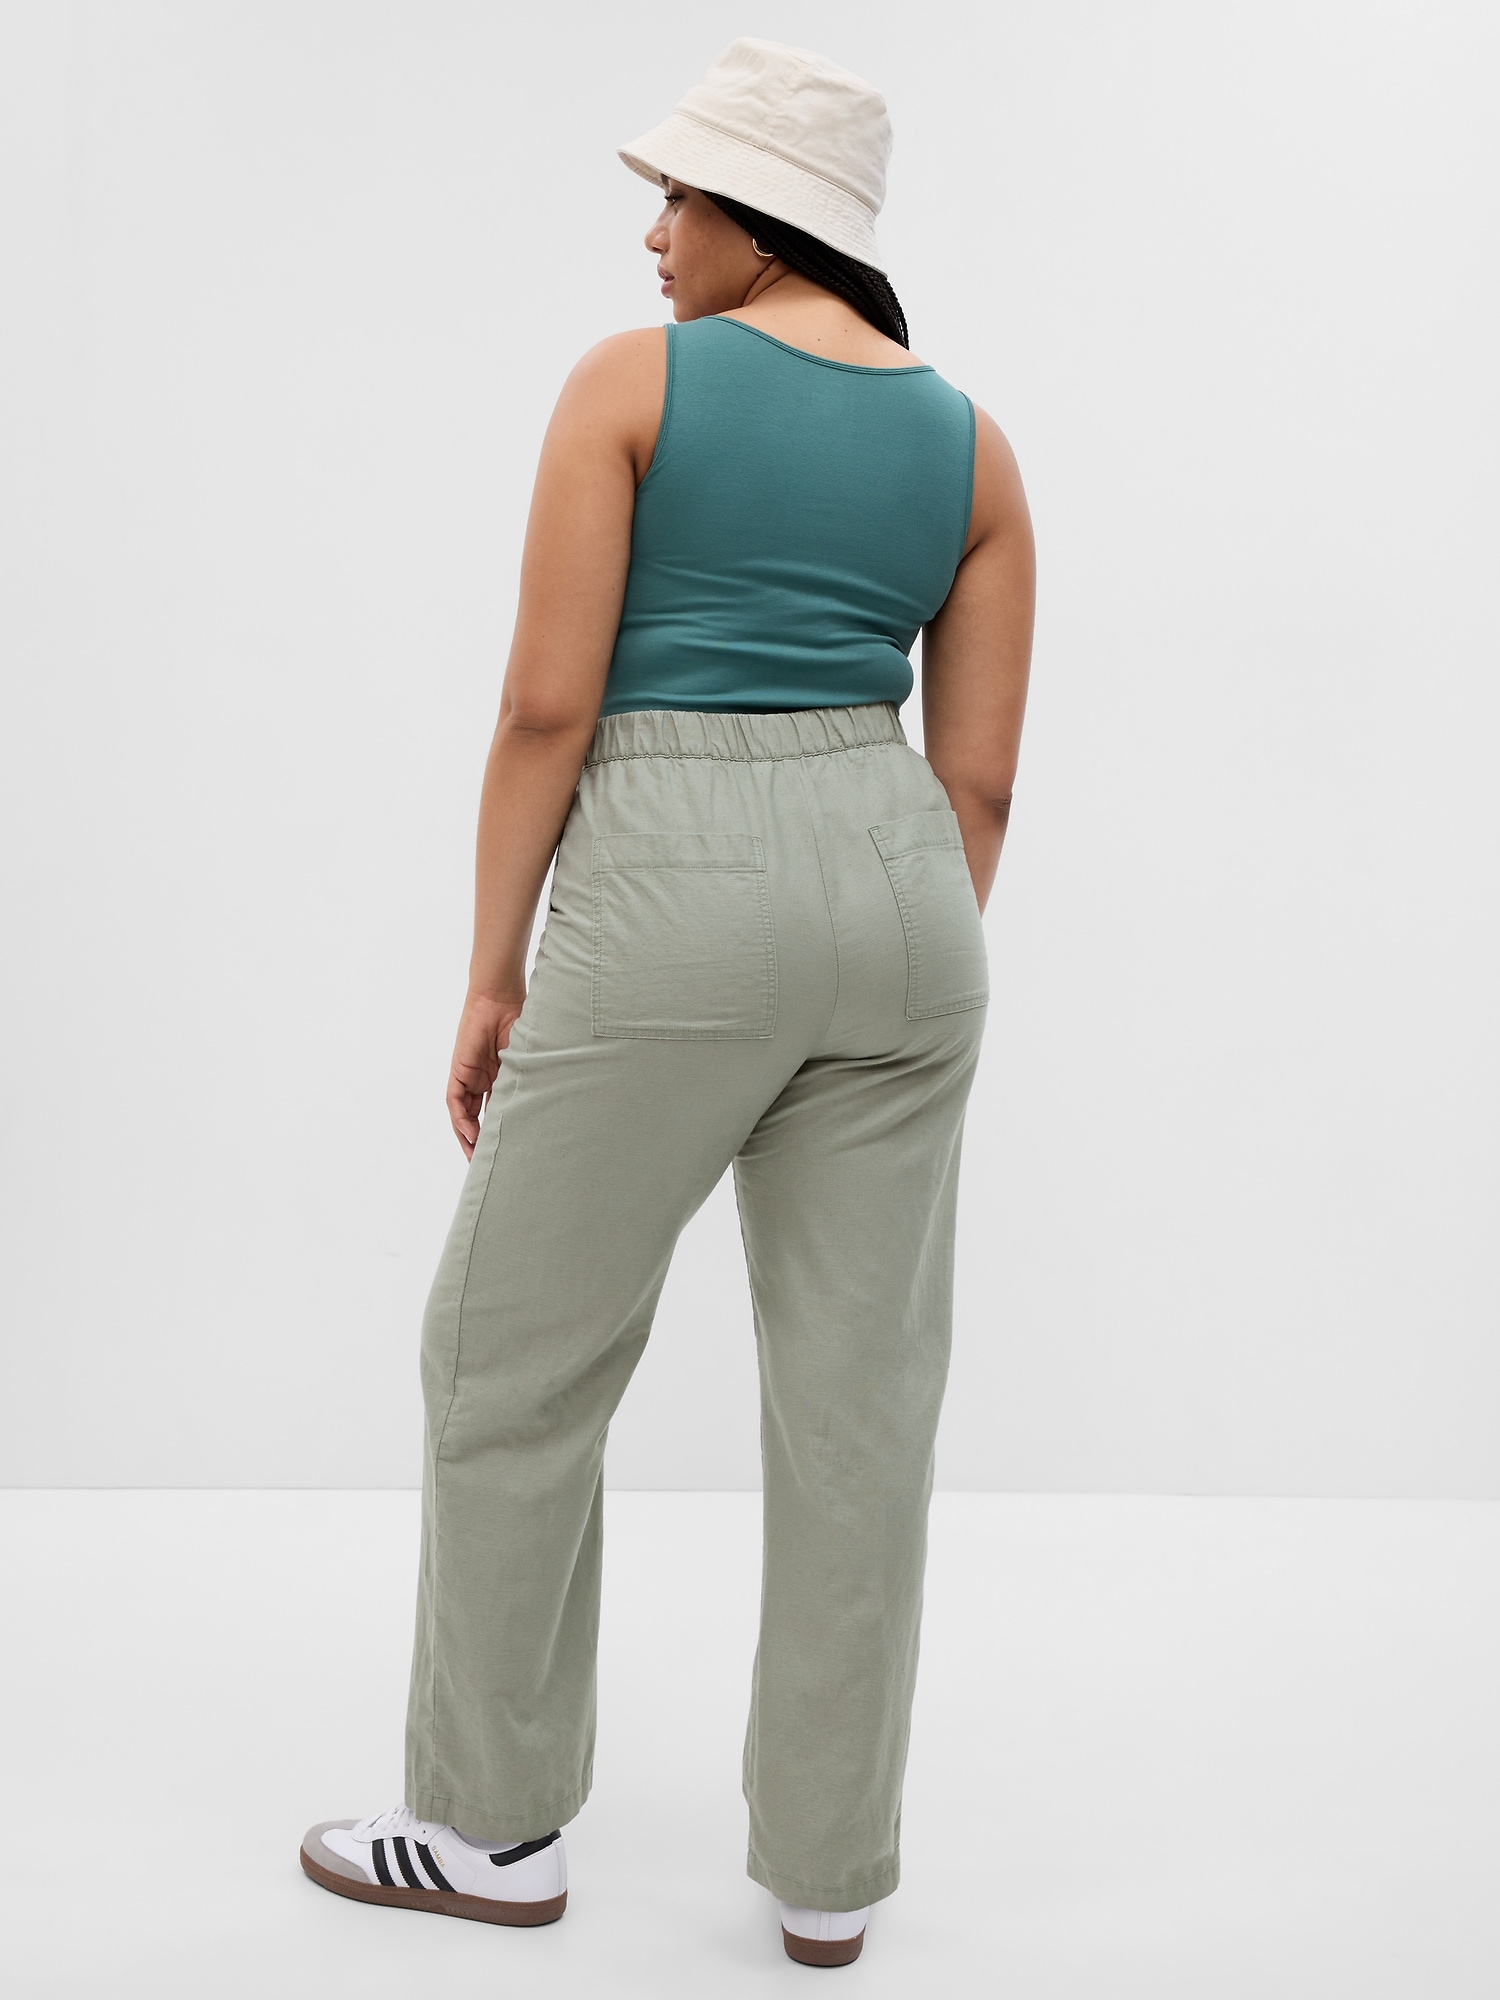 KIHOUT Pants For Women Deals Women's Solid Cotton Linen Loose Wide